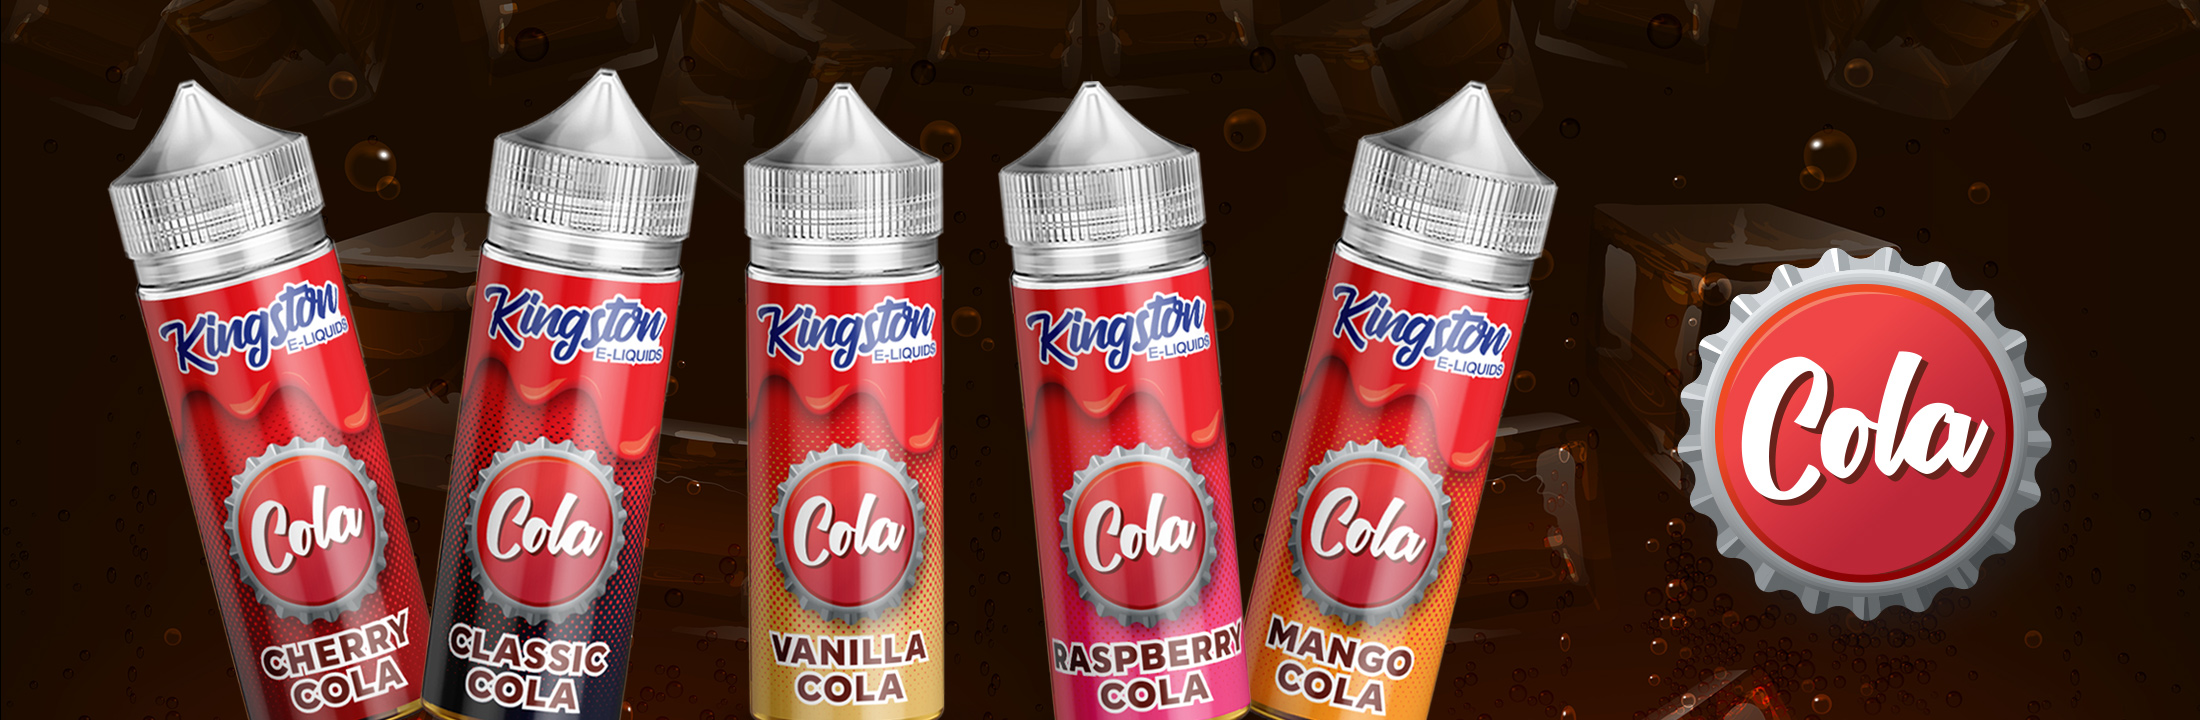 Kingston Cola range